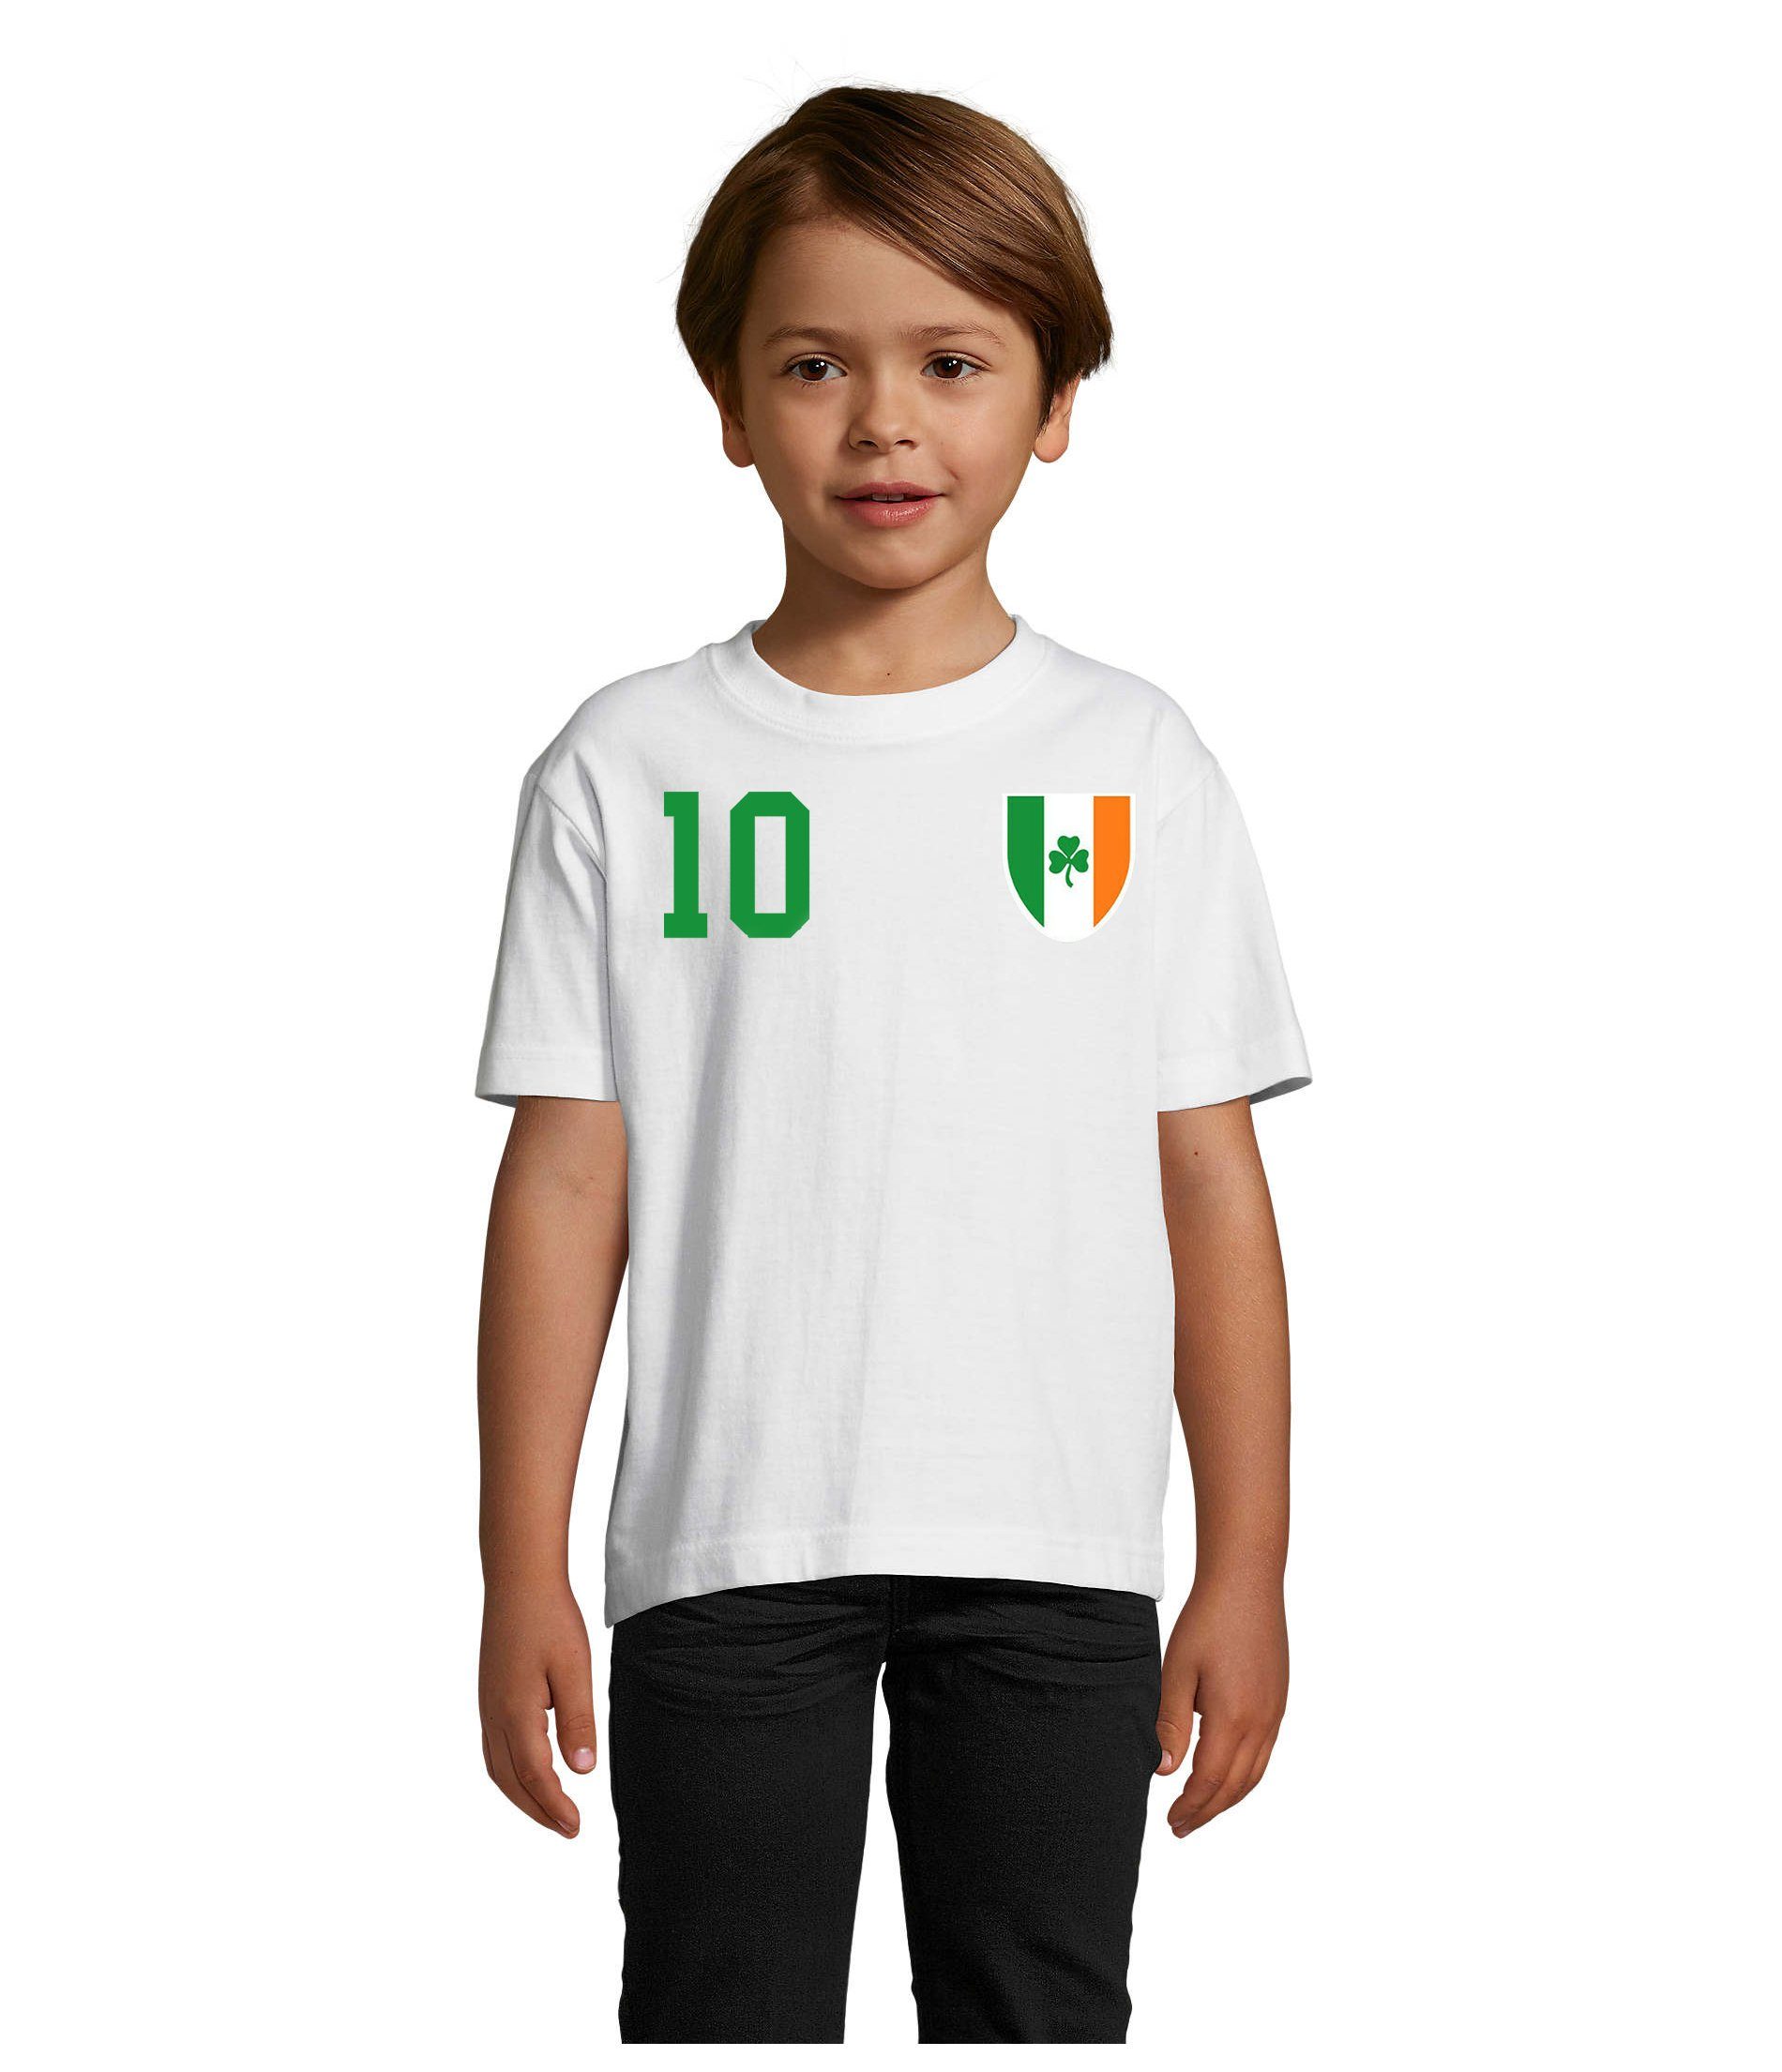 Blondie & Brownie T-Shirt Kinder Irland Sport Trikot Fußball Handball Weltmeister WM EM Grün/Weiss